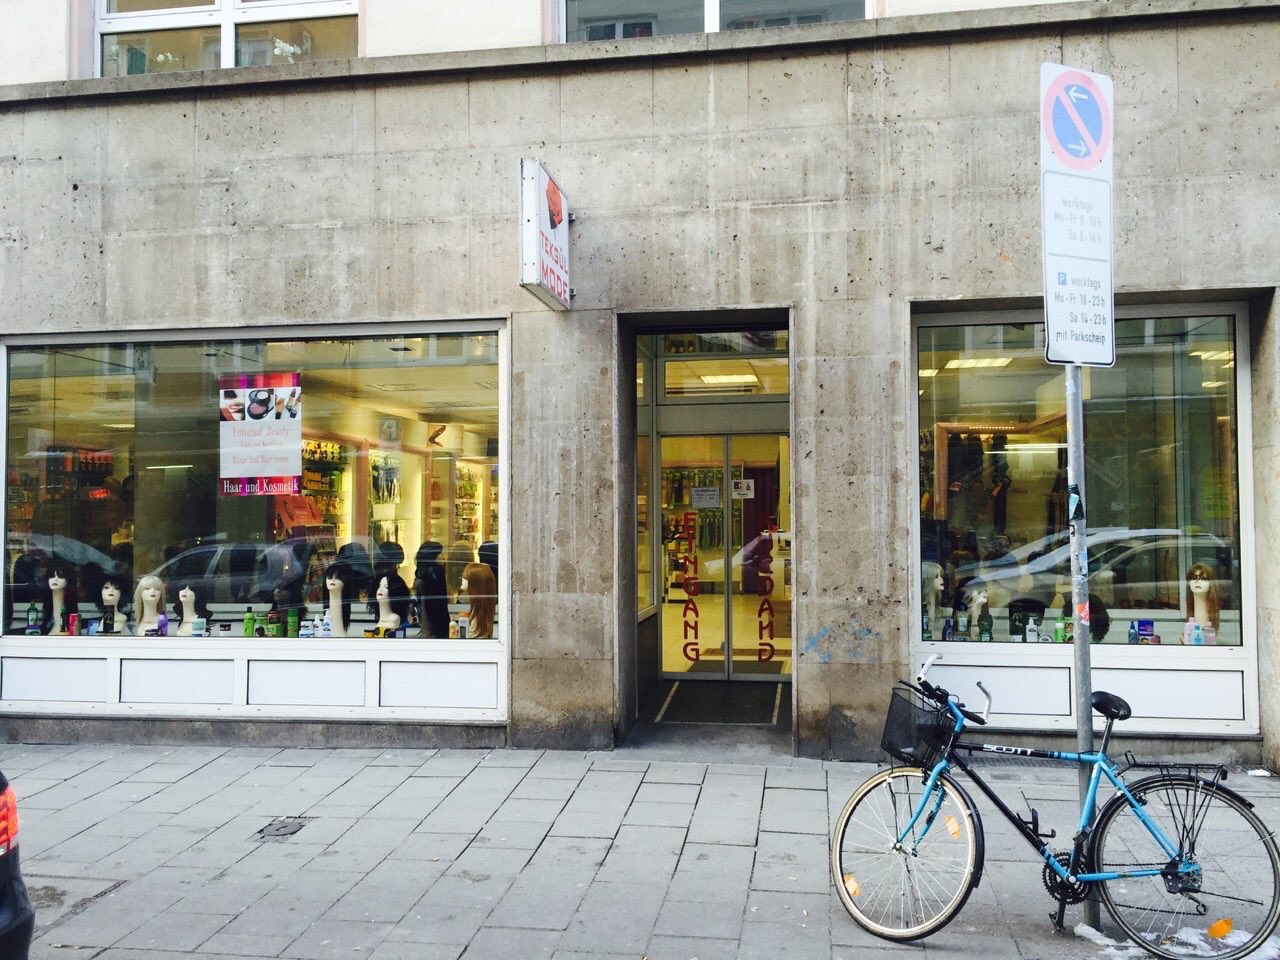 Gute Afro-Shops in München? (Haarverlaengerung, Afroshop)